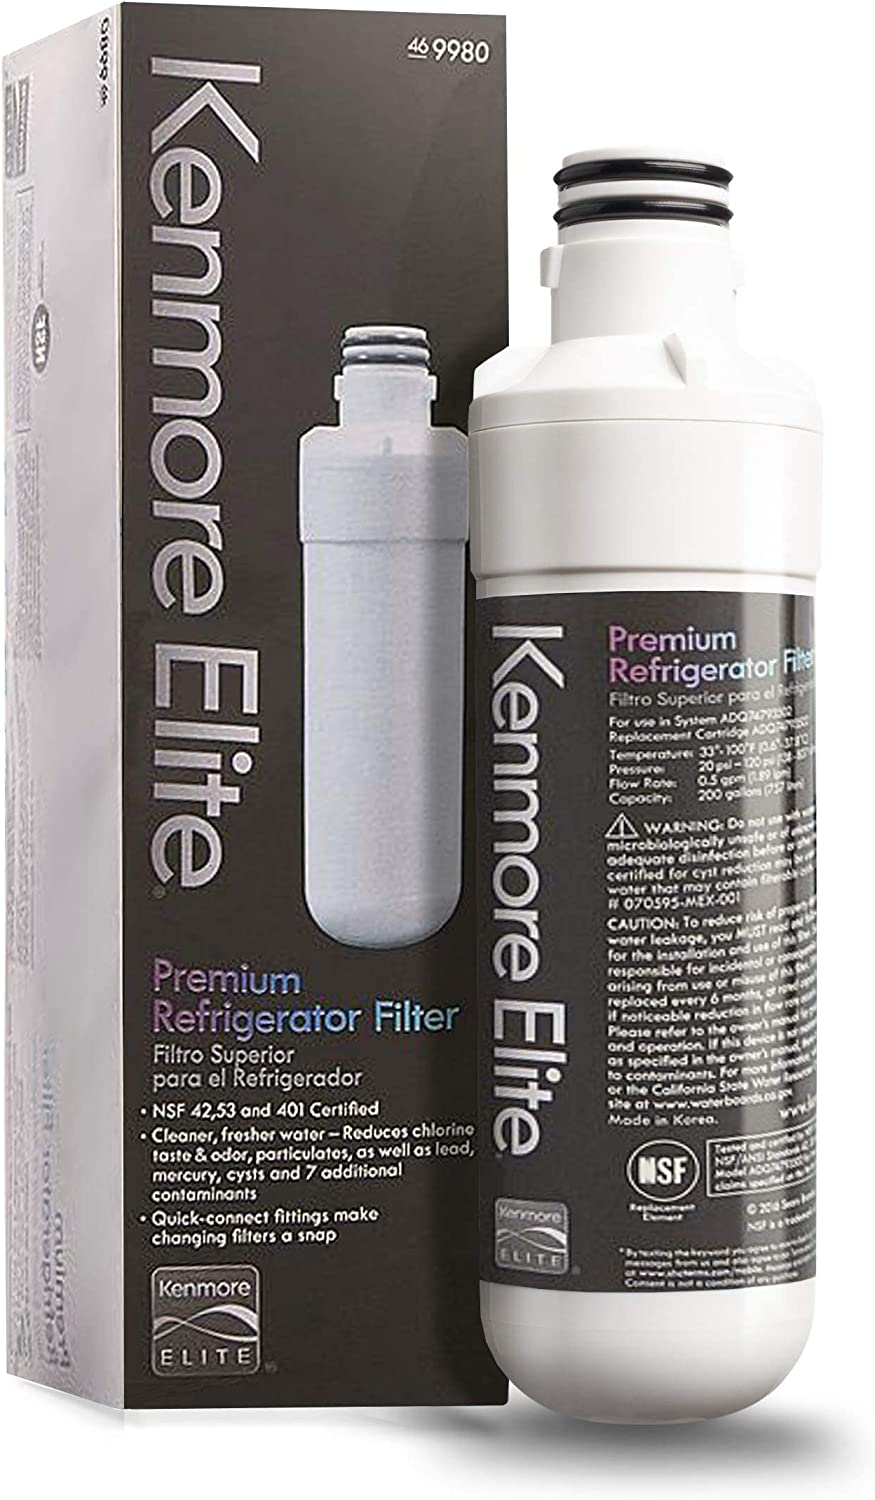 Kenmore 9980 Replacement Refrigerator Water Filter